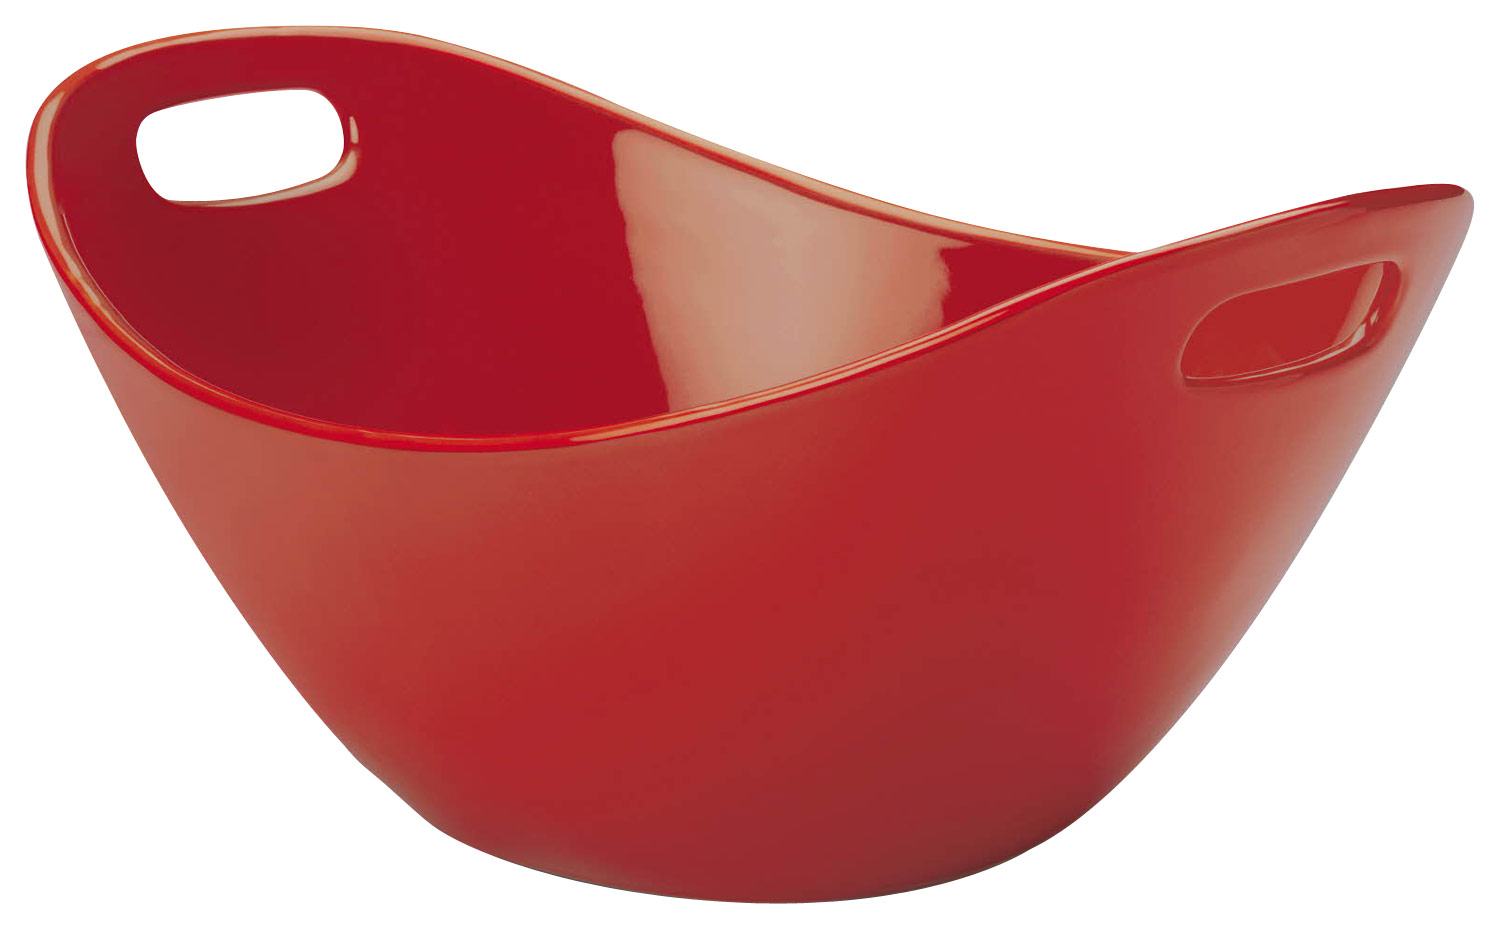 1set New Plastic Bowl With Handle 4pcs Salad Bowl Set. Large Size